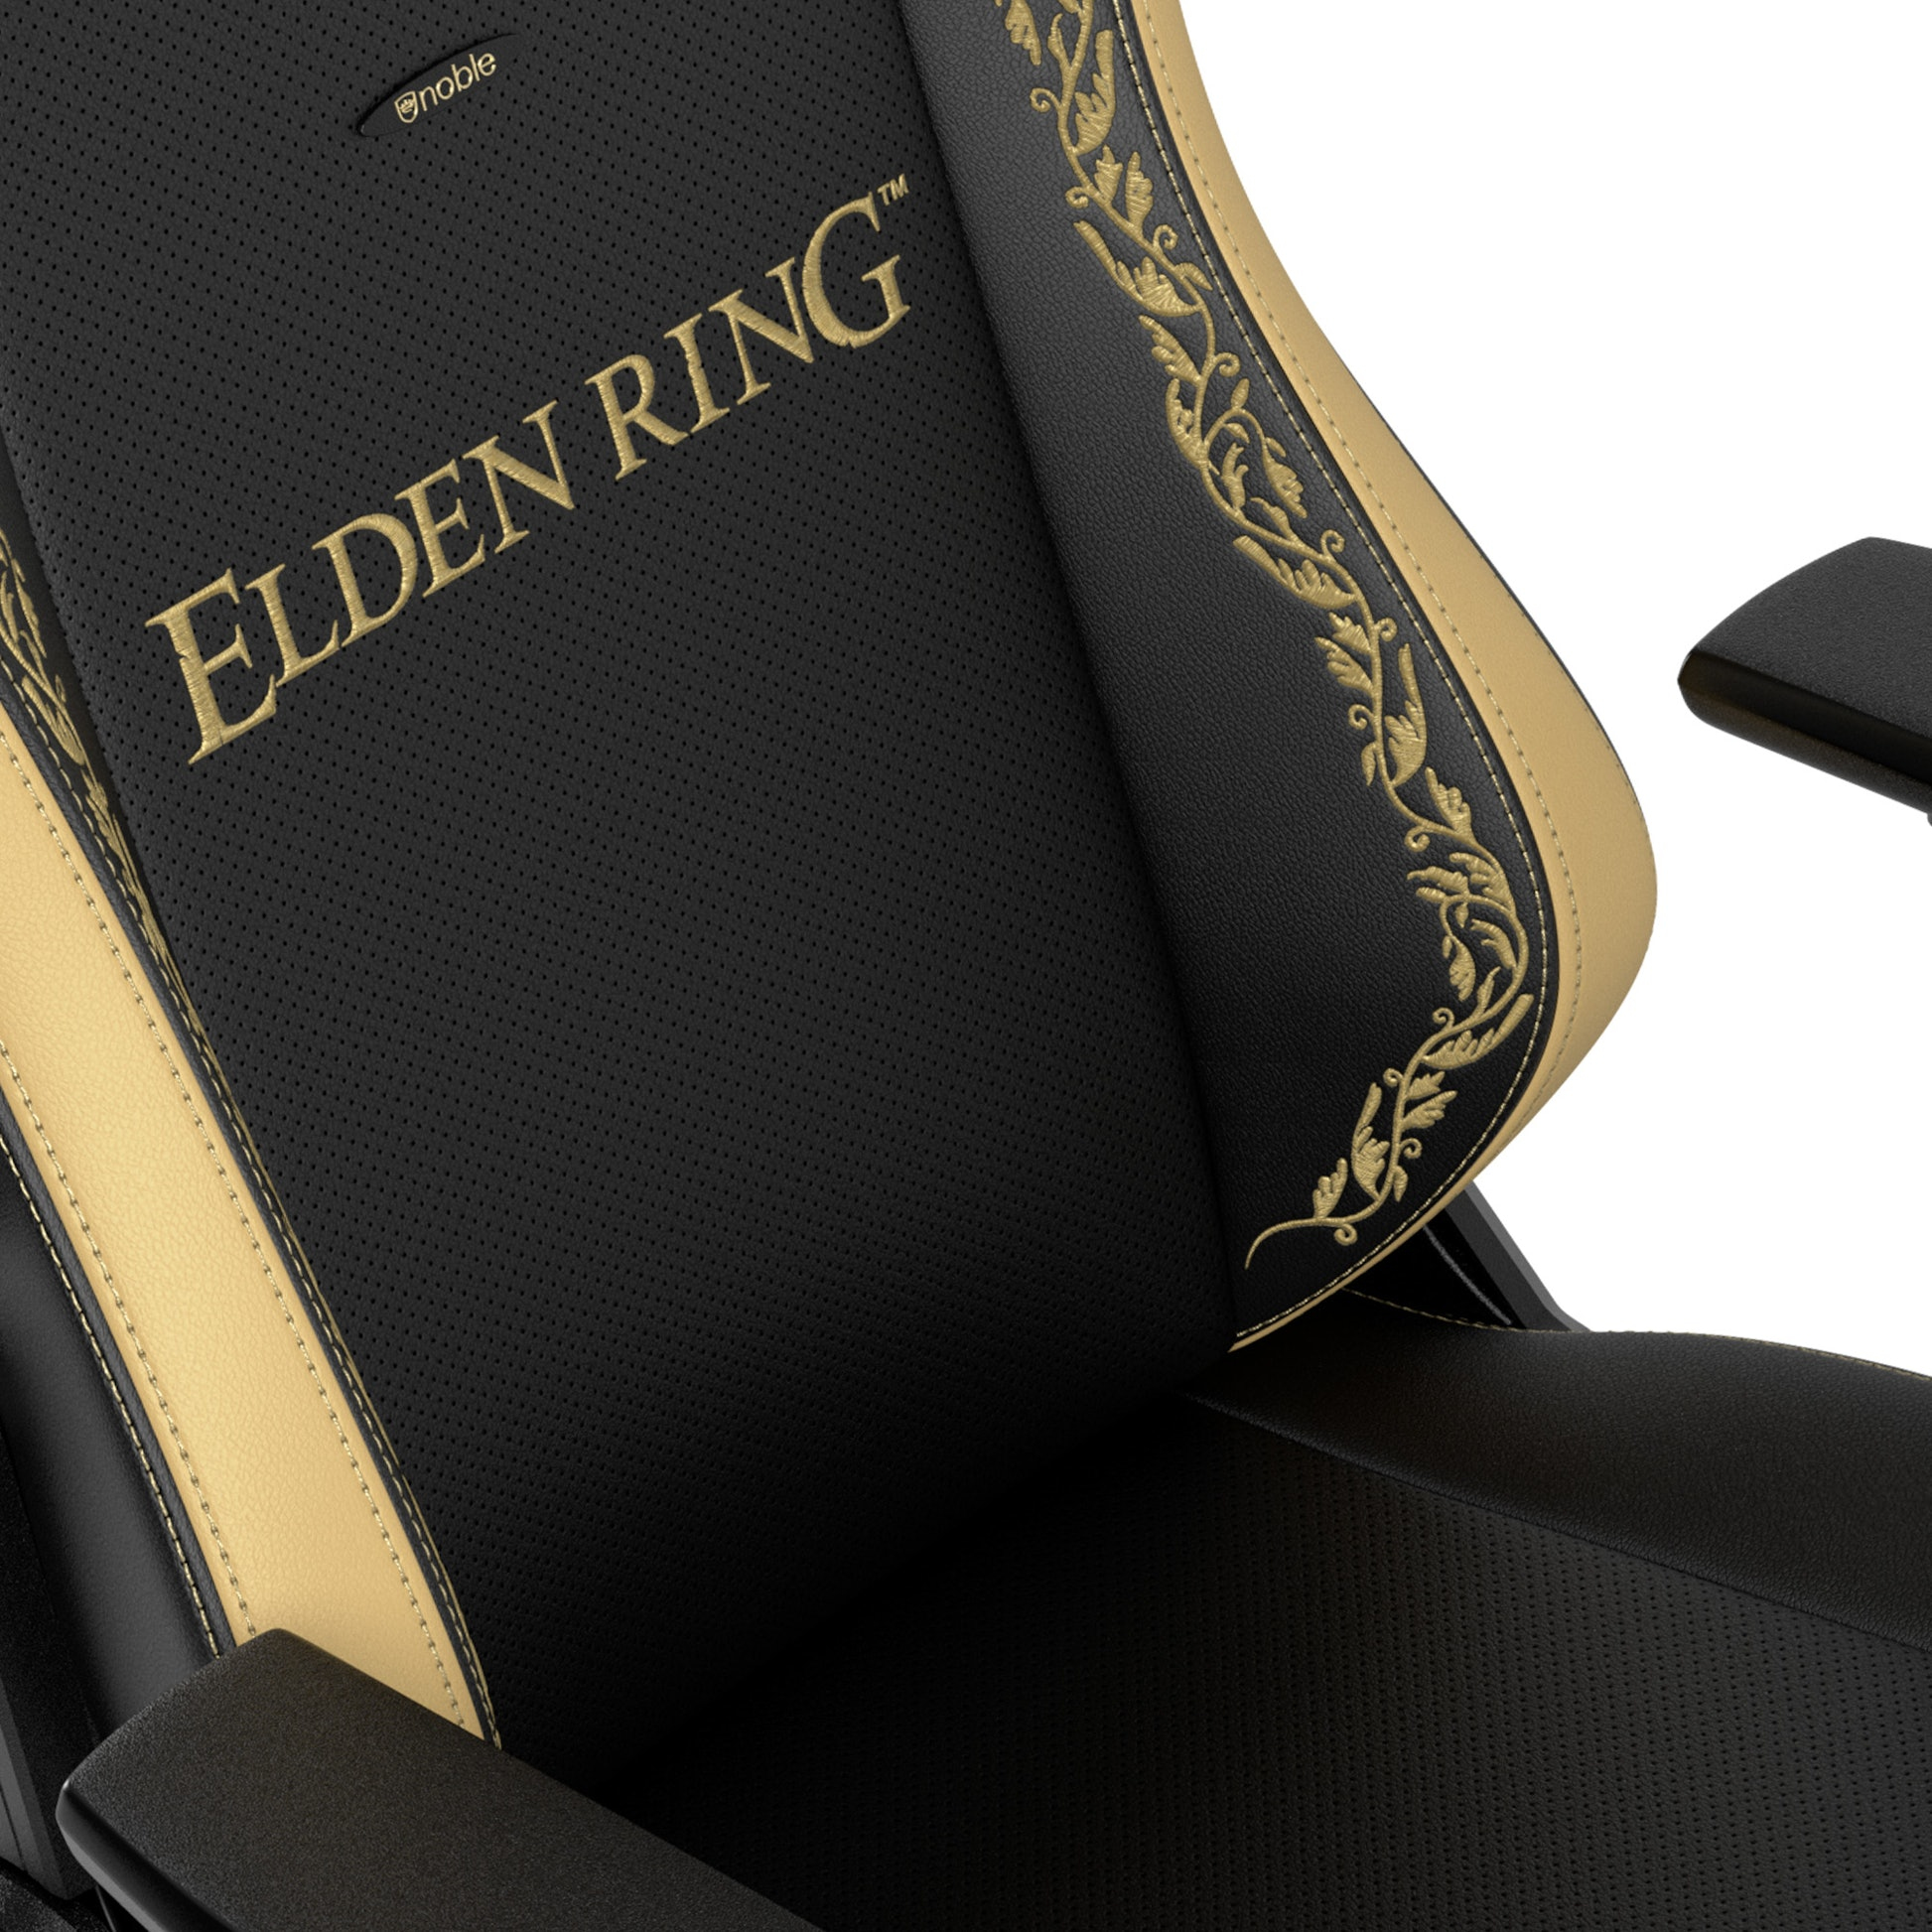 noblechairs - Cadeira noblechairs HERO - Elden Ring Edition